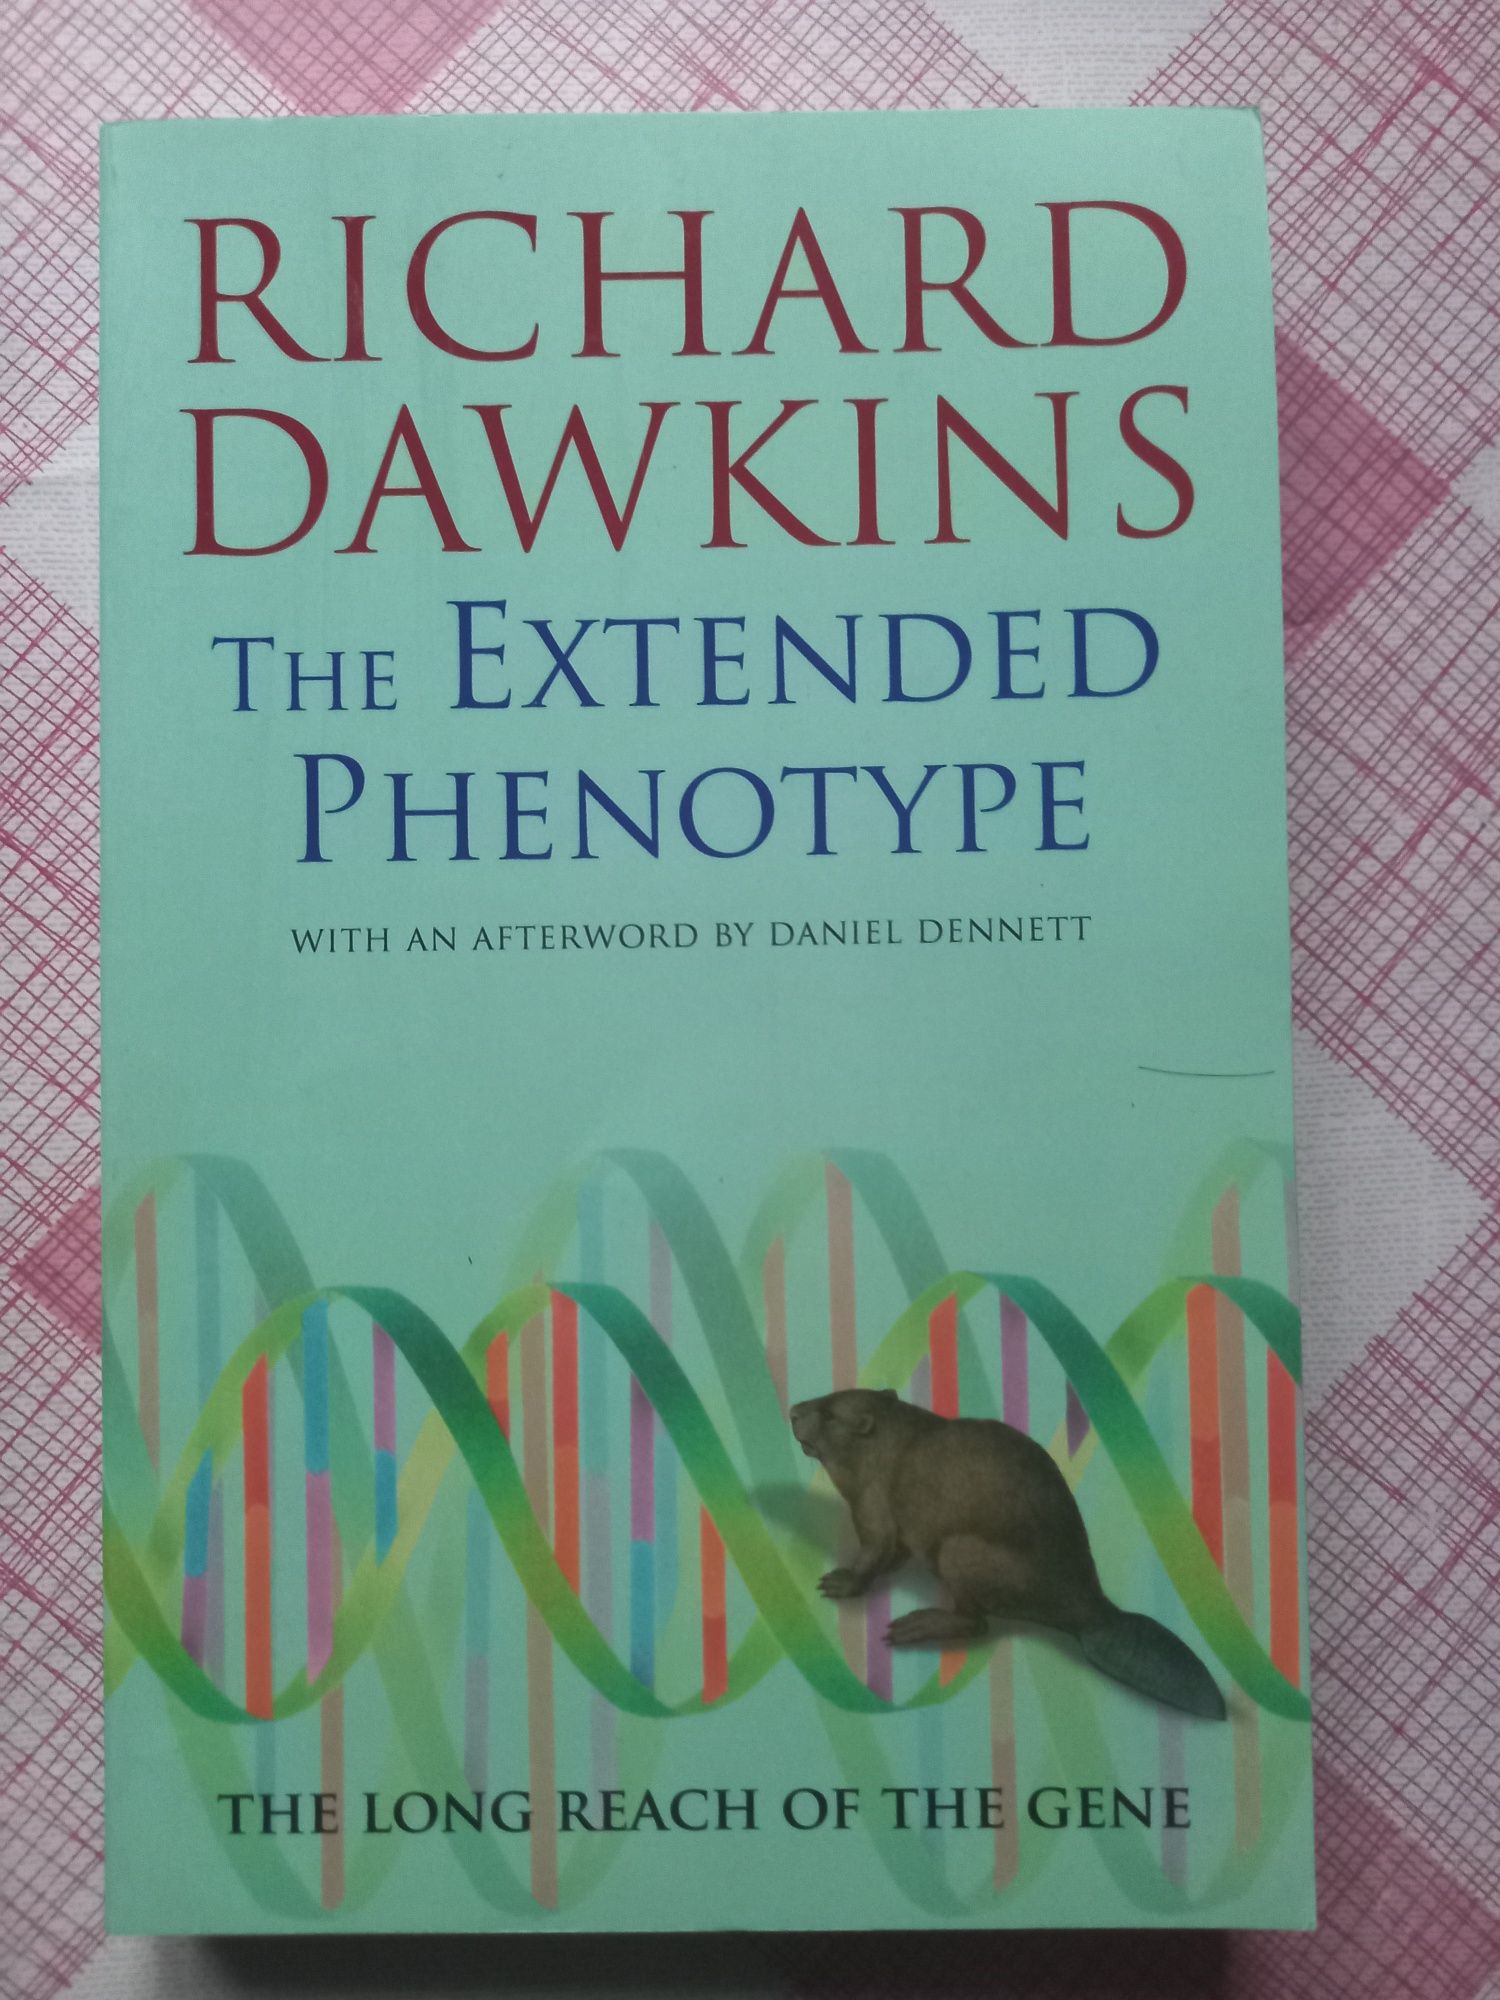 The extended phenotype - Richard Dawkins